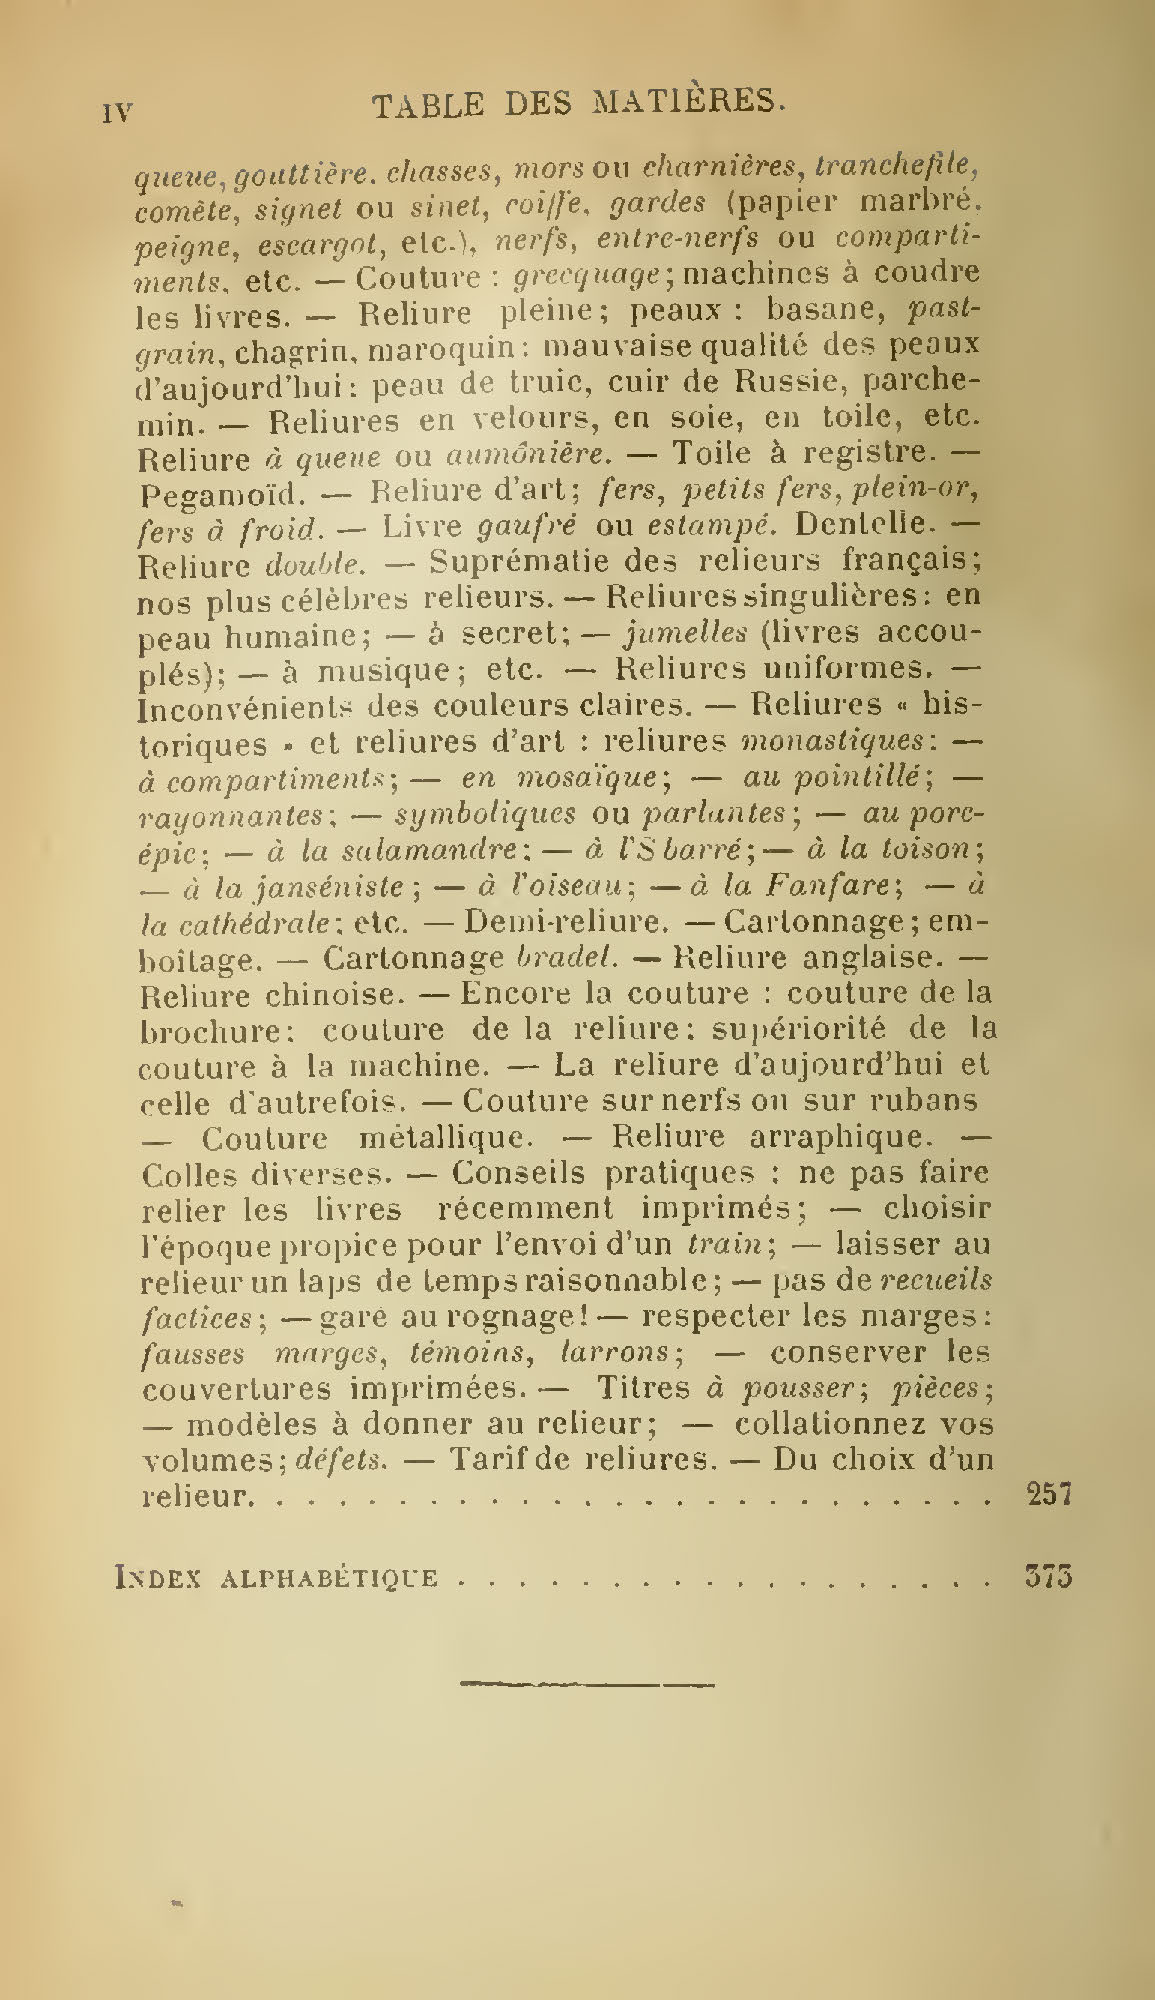 Albert Cim, Le Livre, t. III, p. IV.